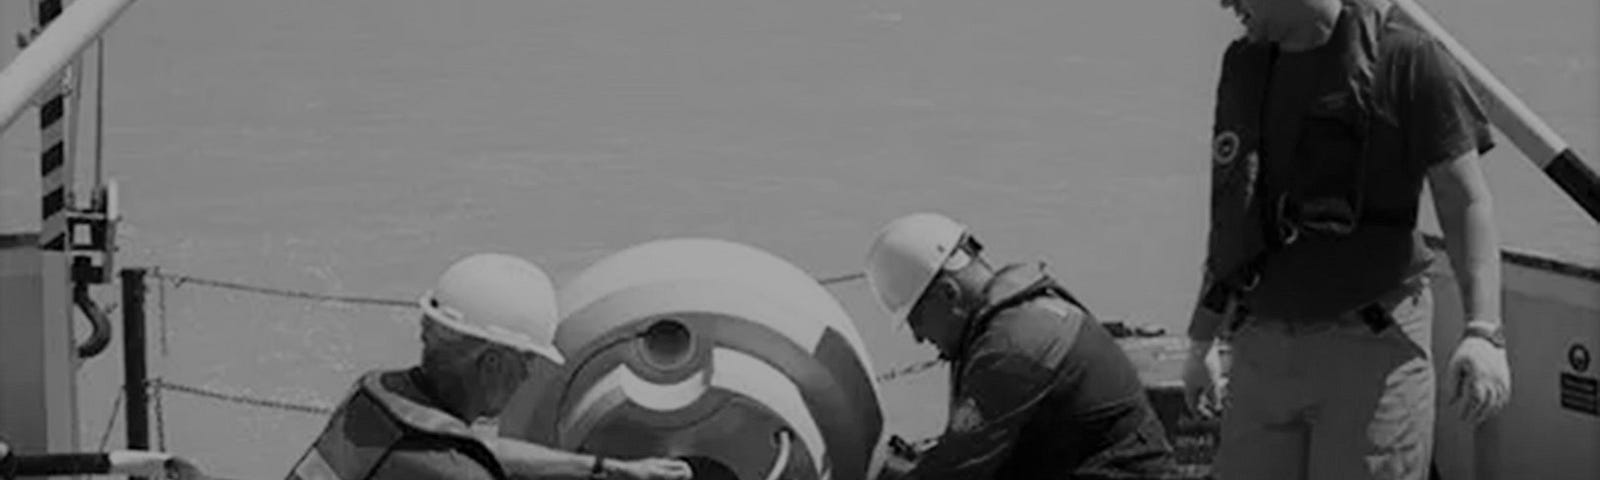 Marine engineers and technicians deploying an ocean data buoy